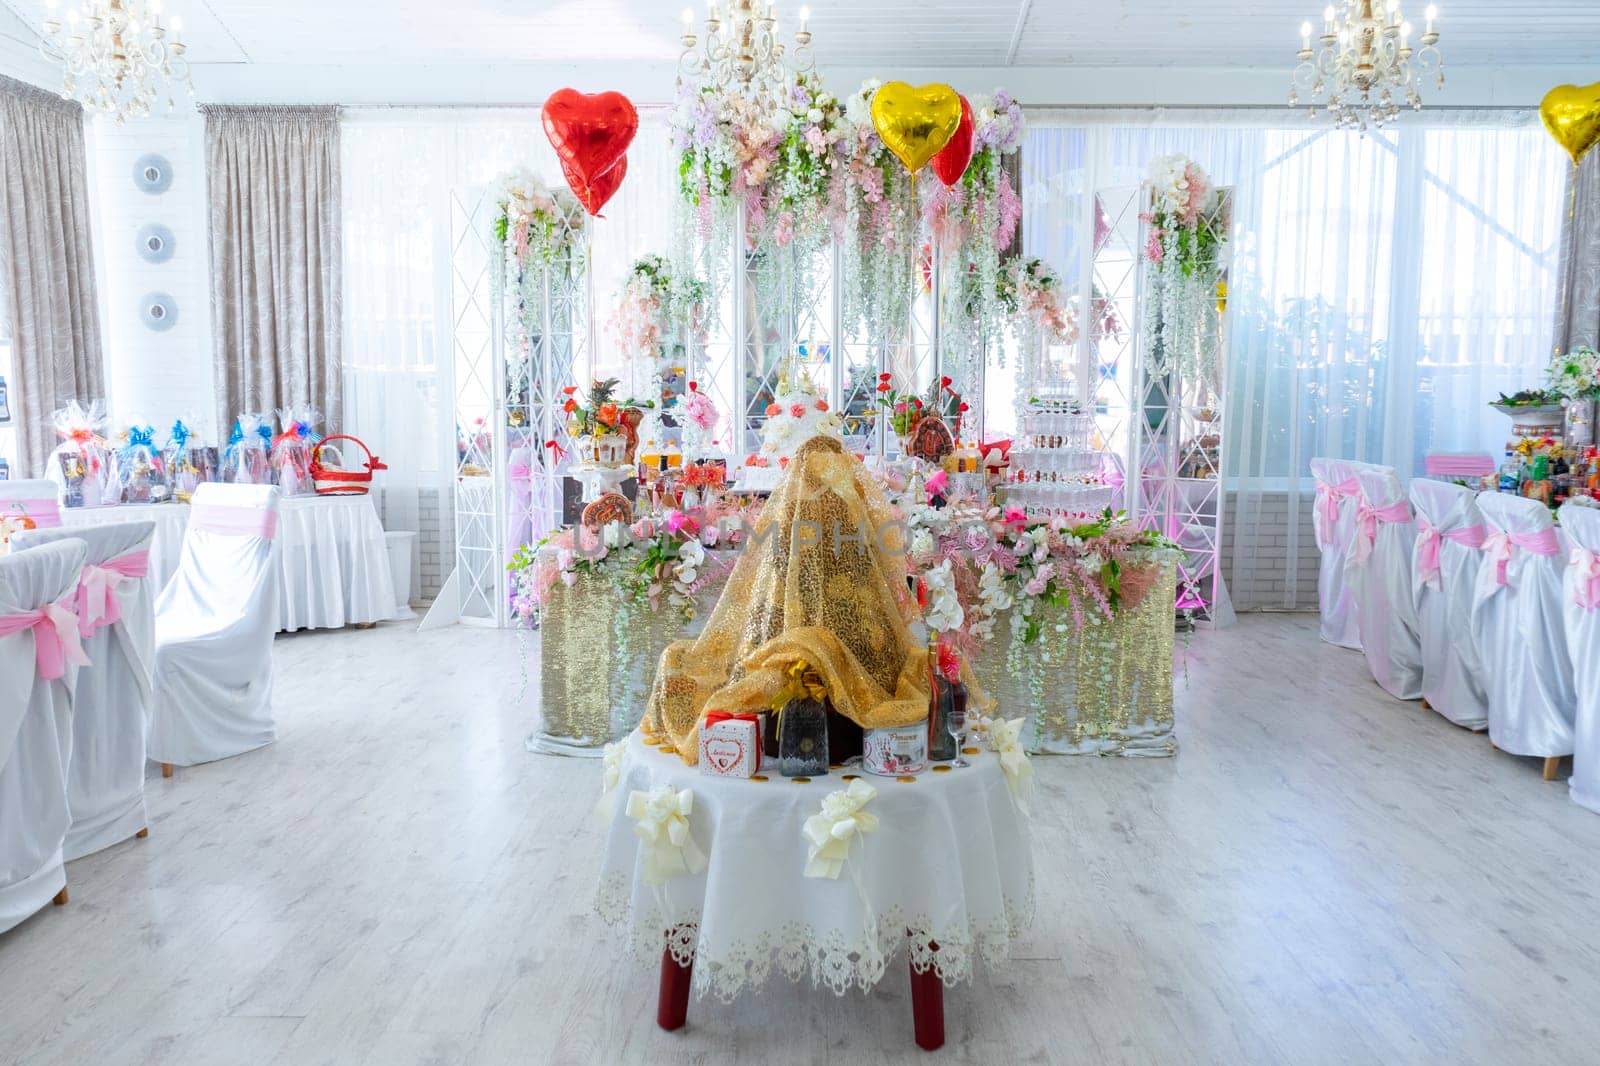 Decorated banquet hall at a gypsy wedding by Serhii_Voroshchuk